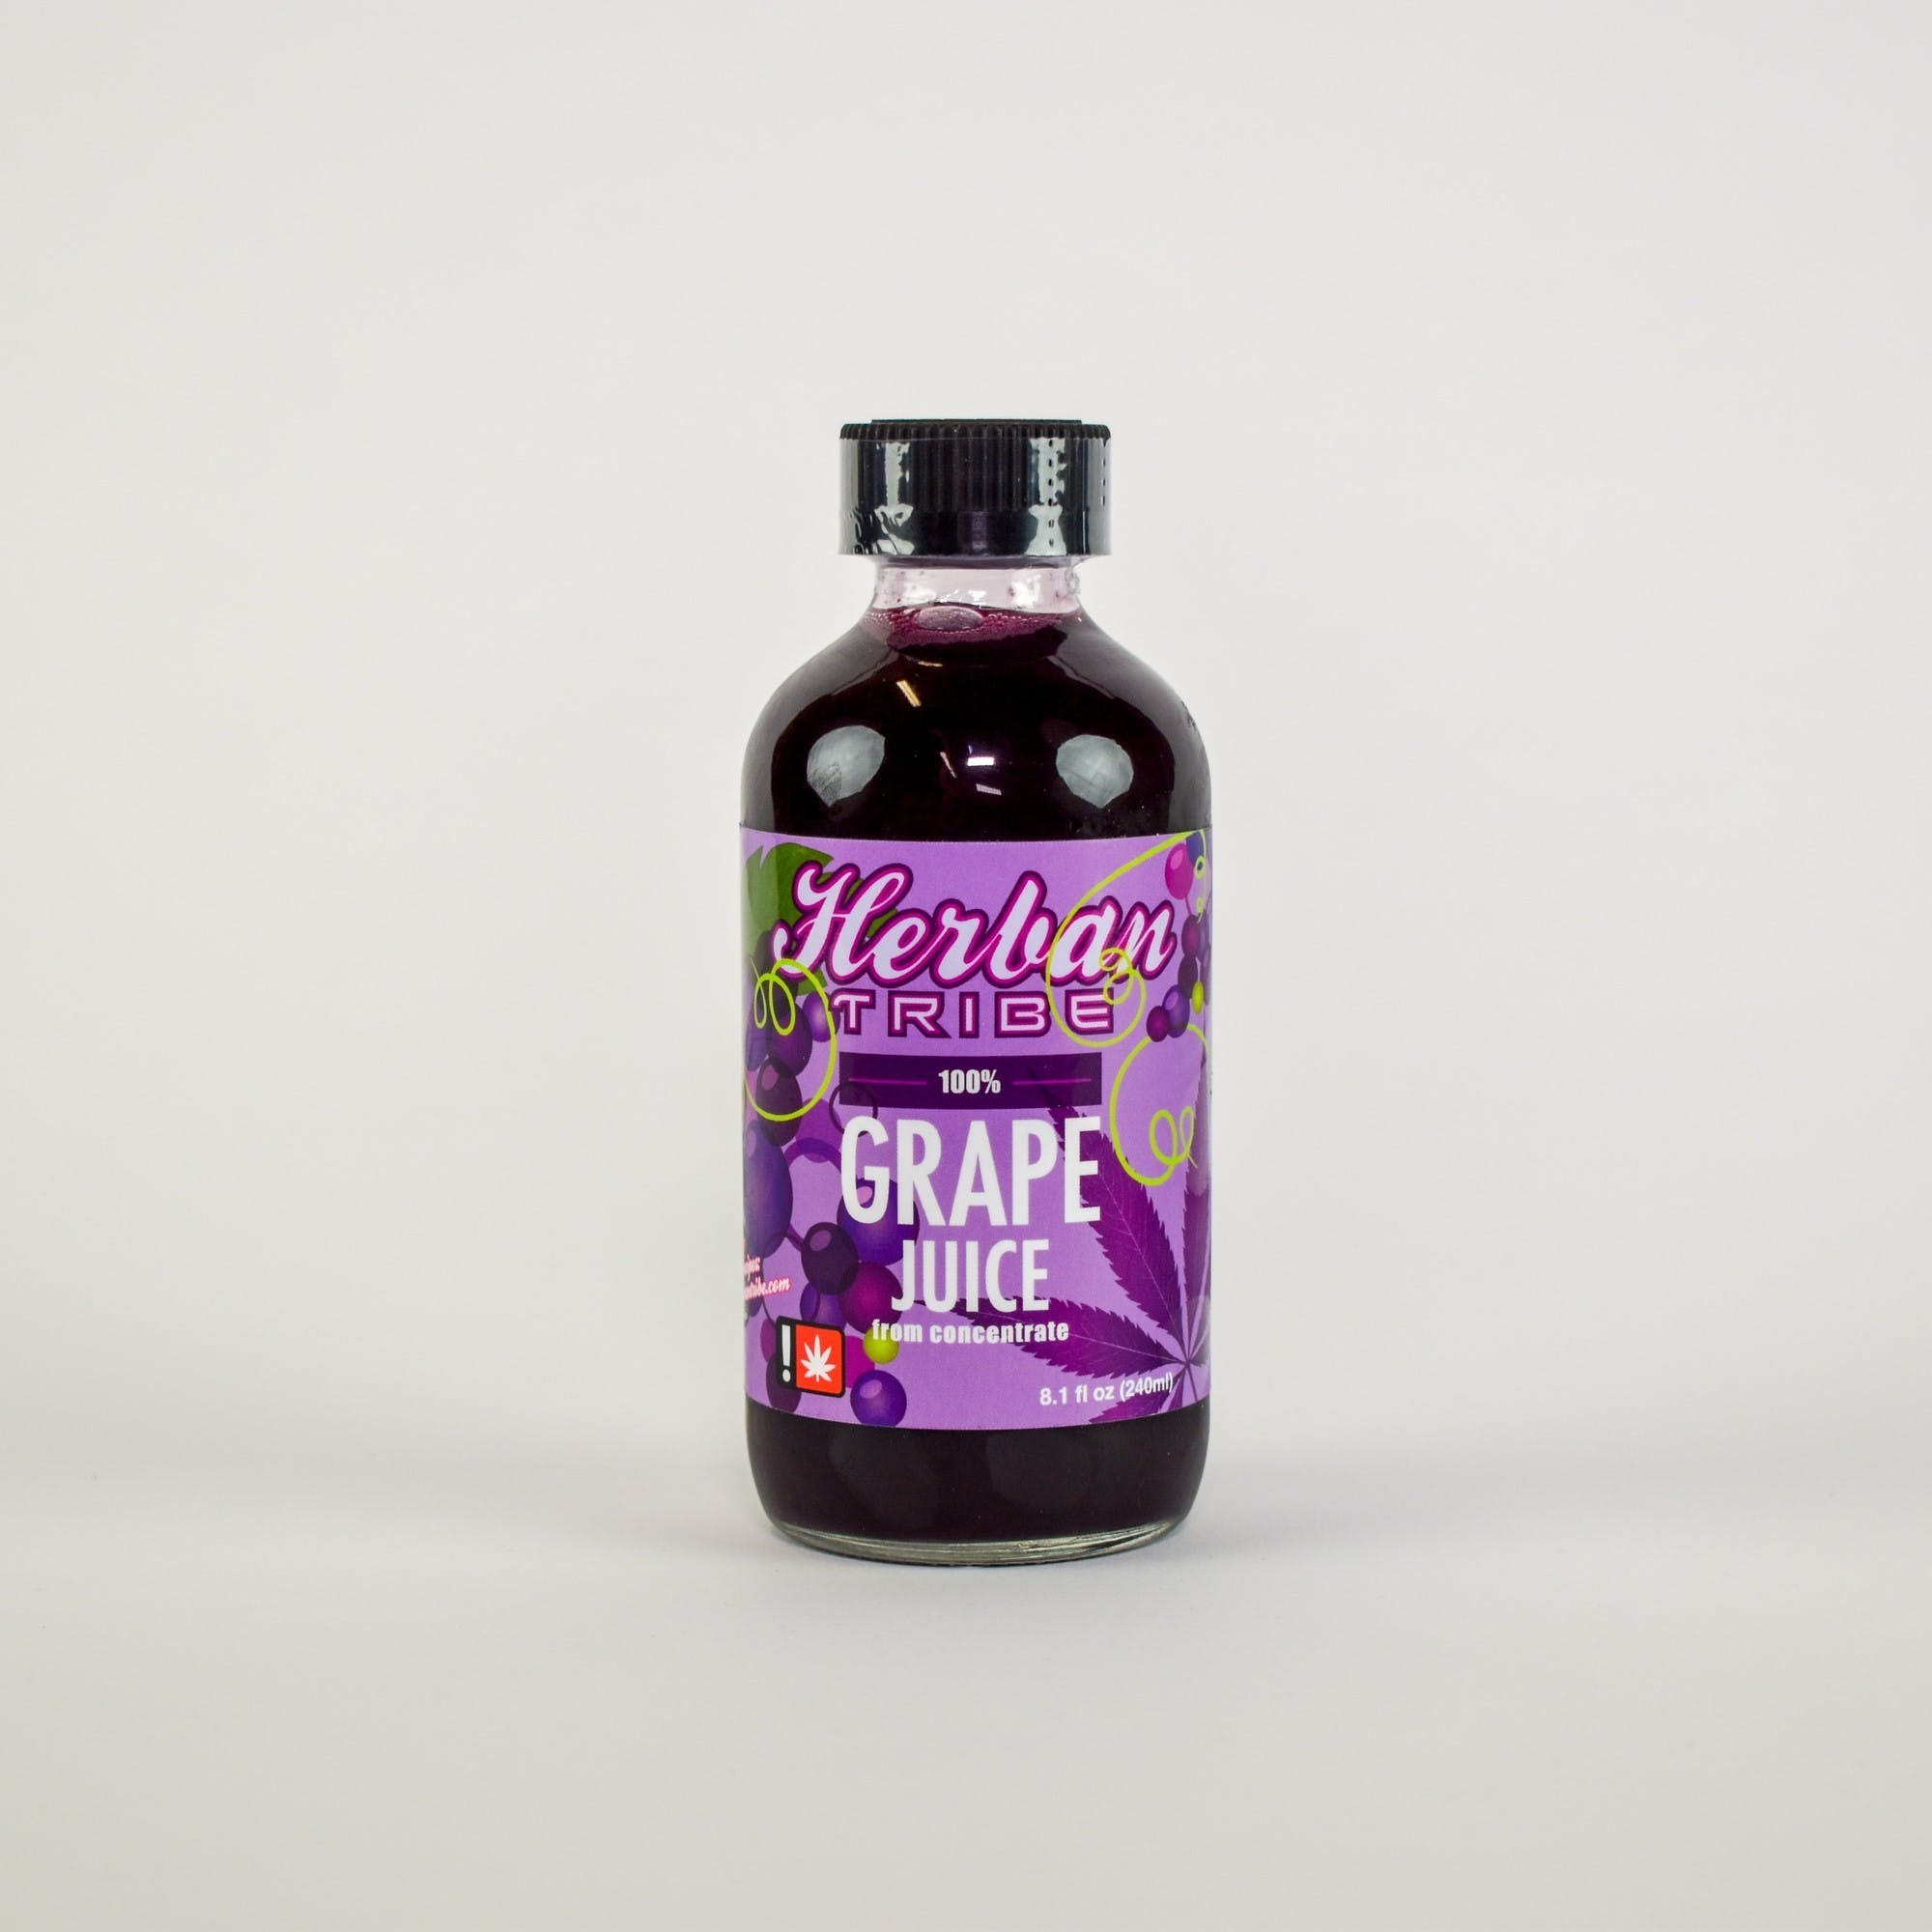 Herban Tribe - Grape Juice 50mg